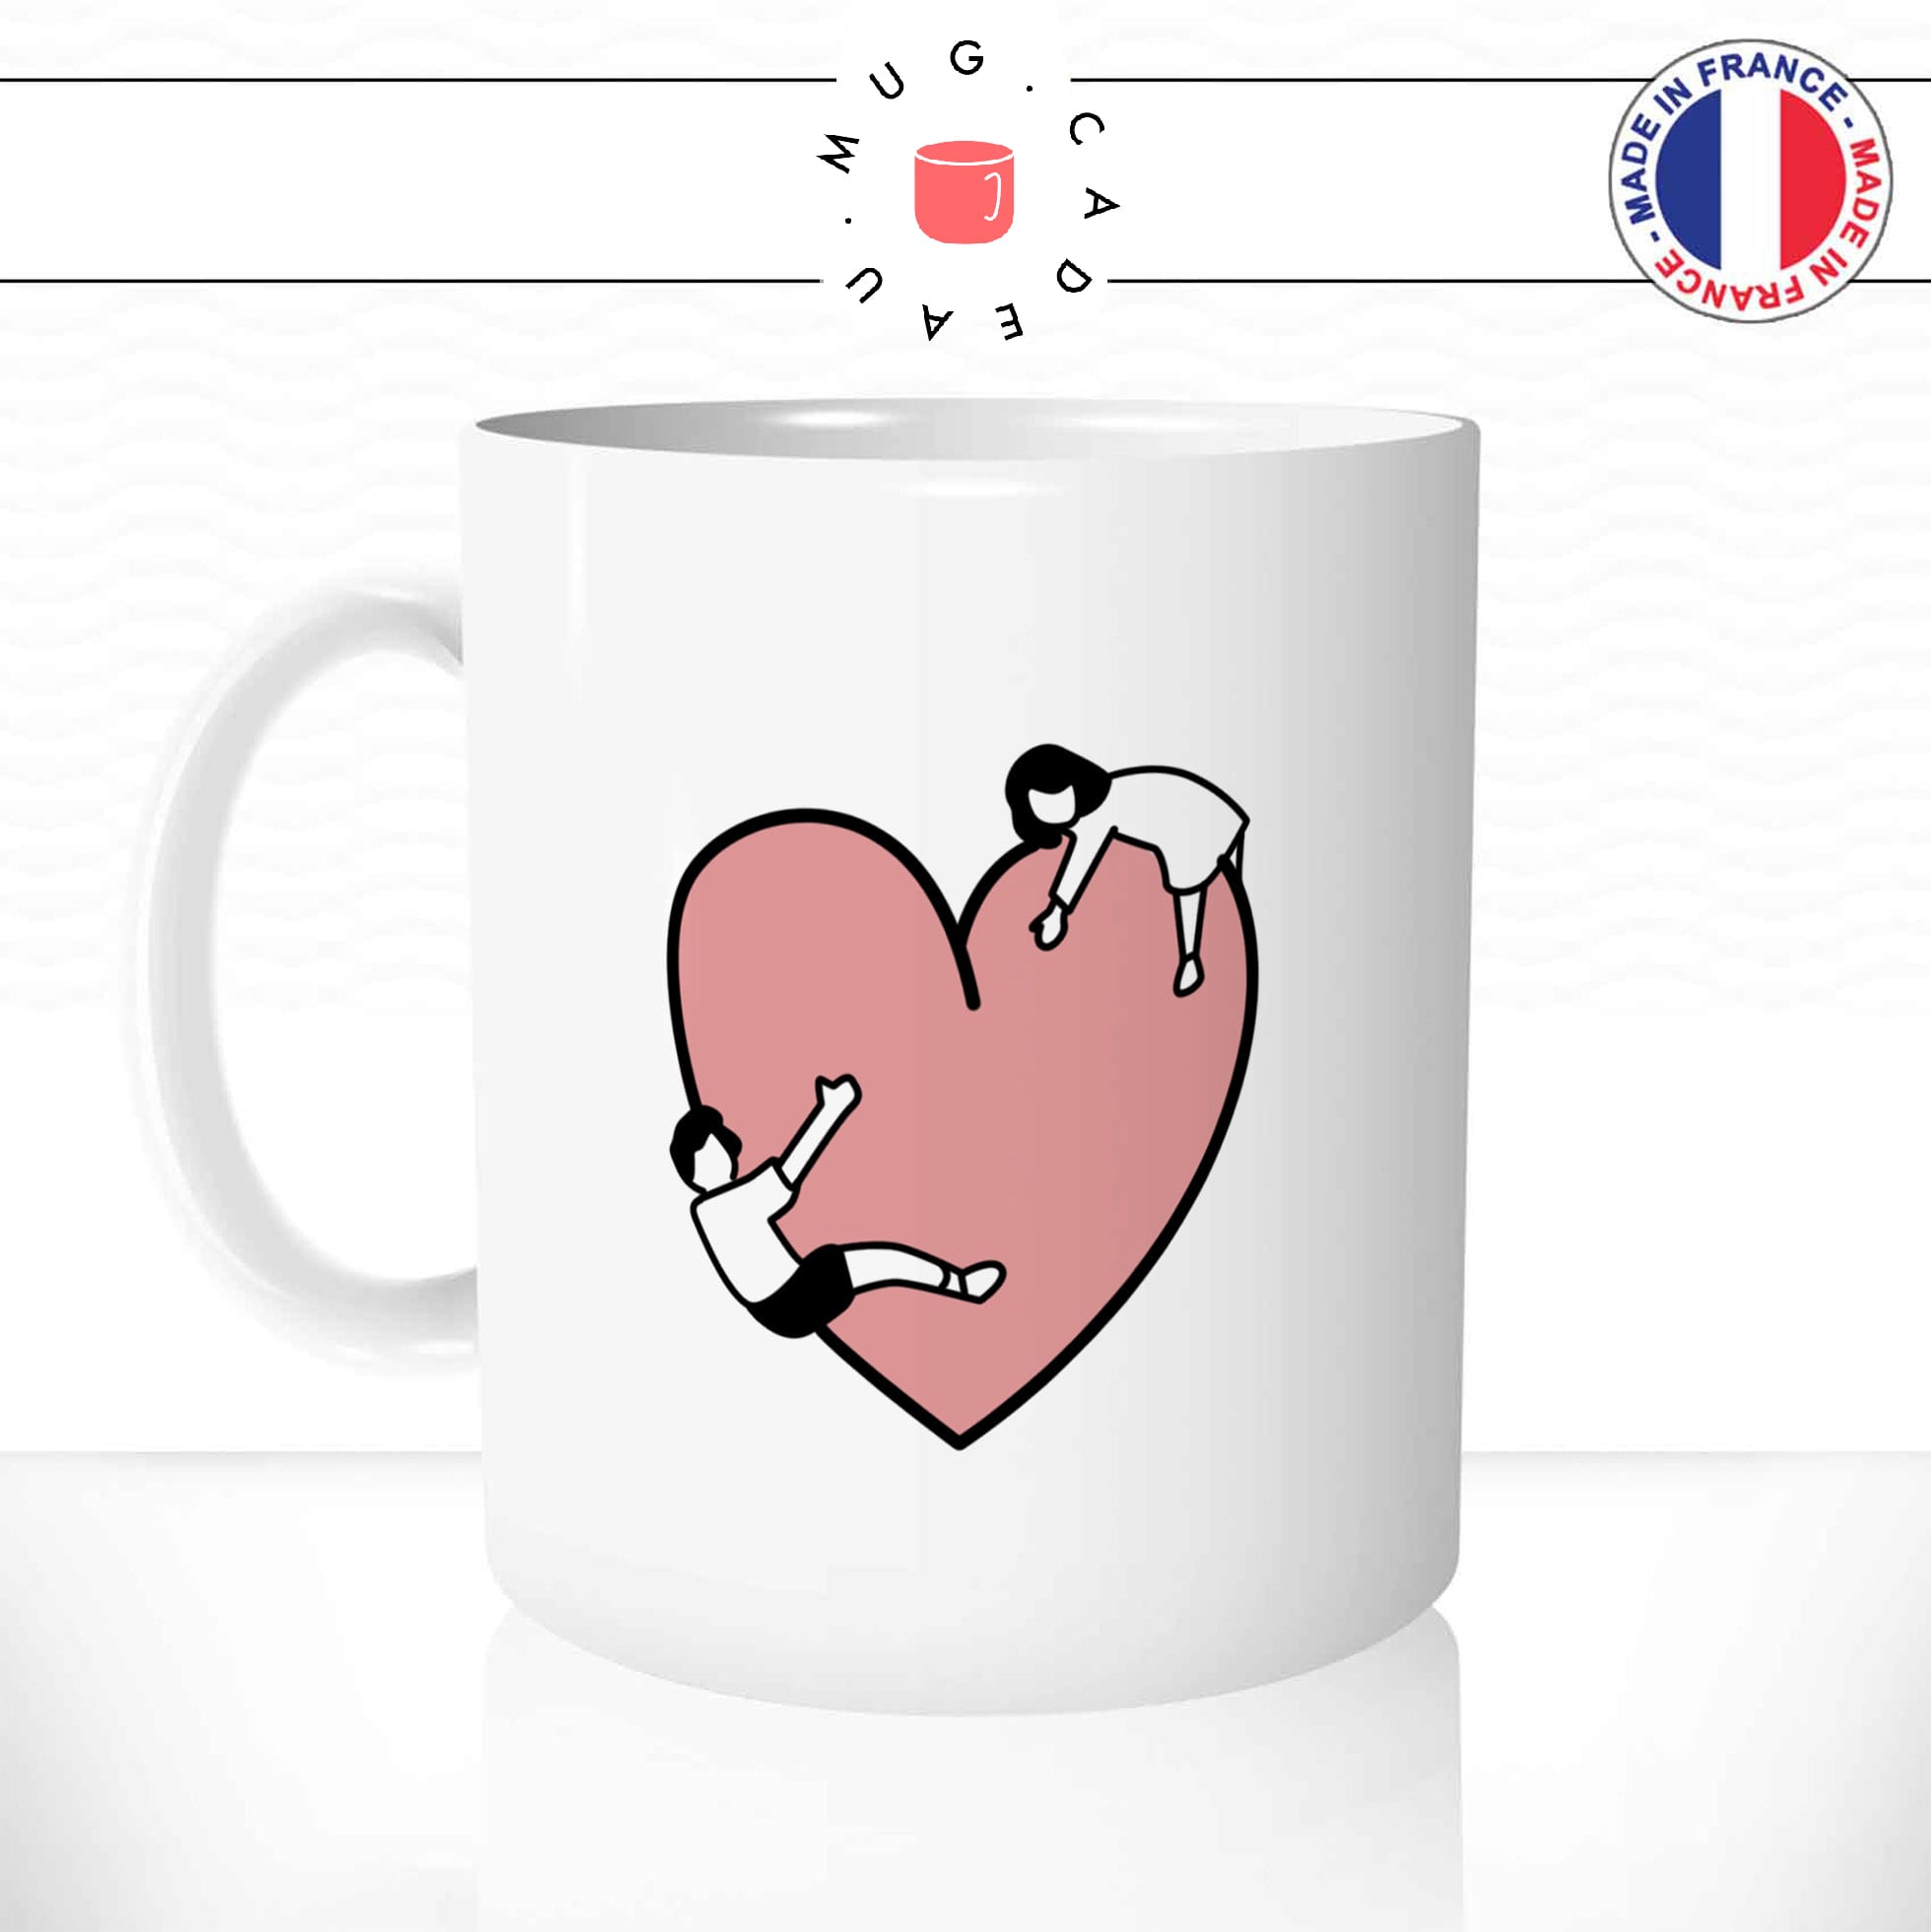 mug-tasse-coeur-couple-dessin-homme-femme-rouge-rose-mignon-amour-offrir-idee-cadeau2